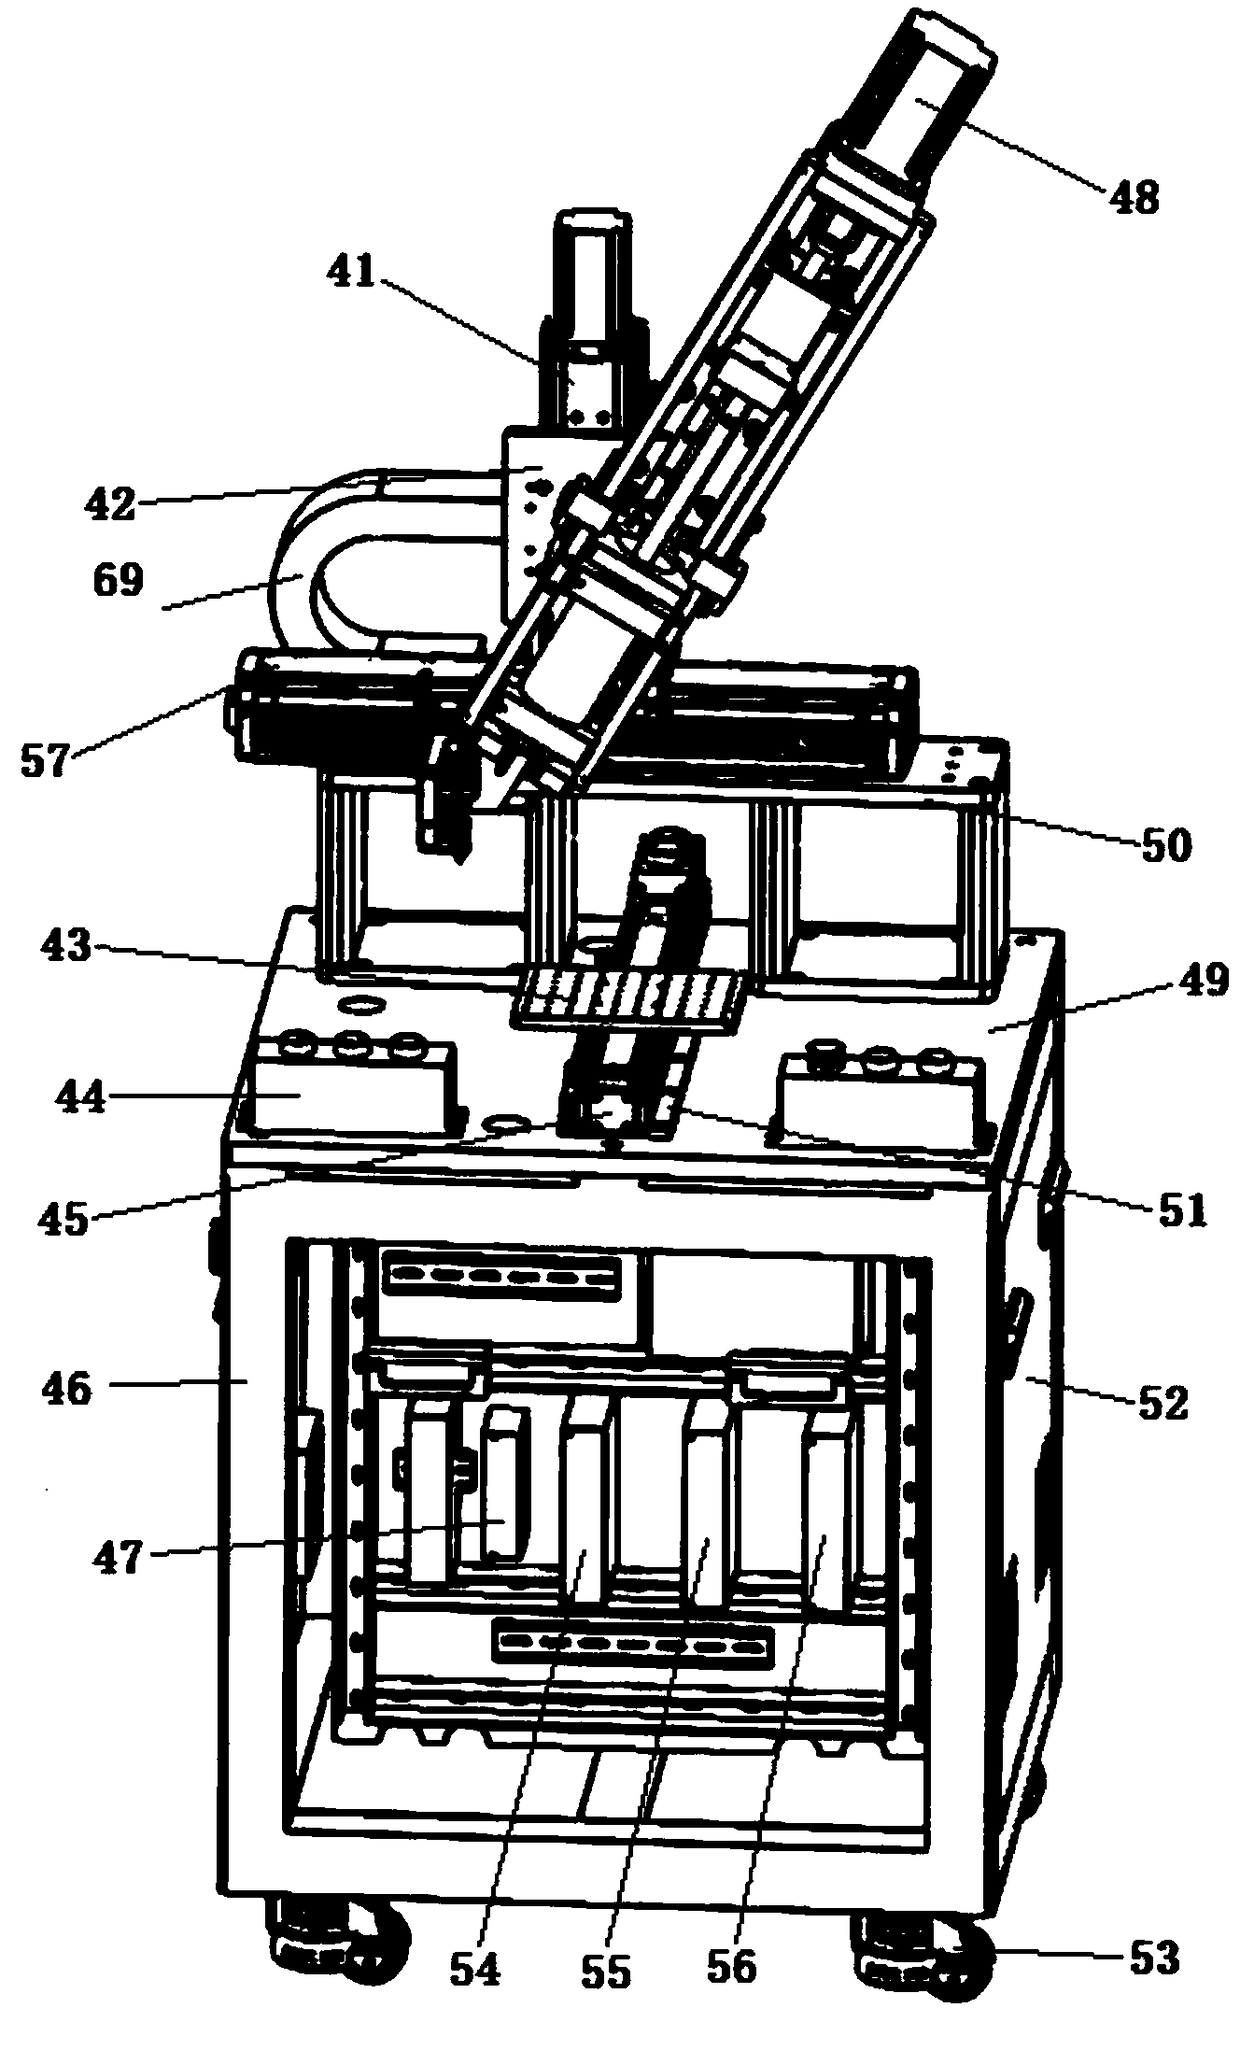 A three-axis Cartesian coordinate large-capacity dispensing machine